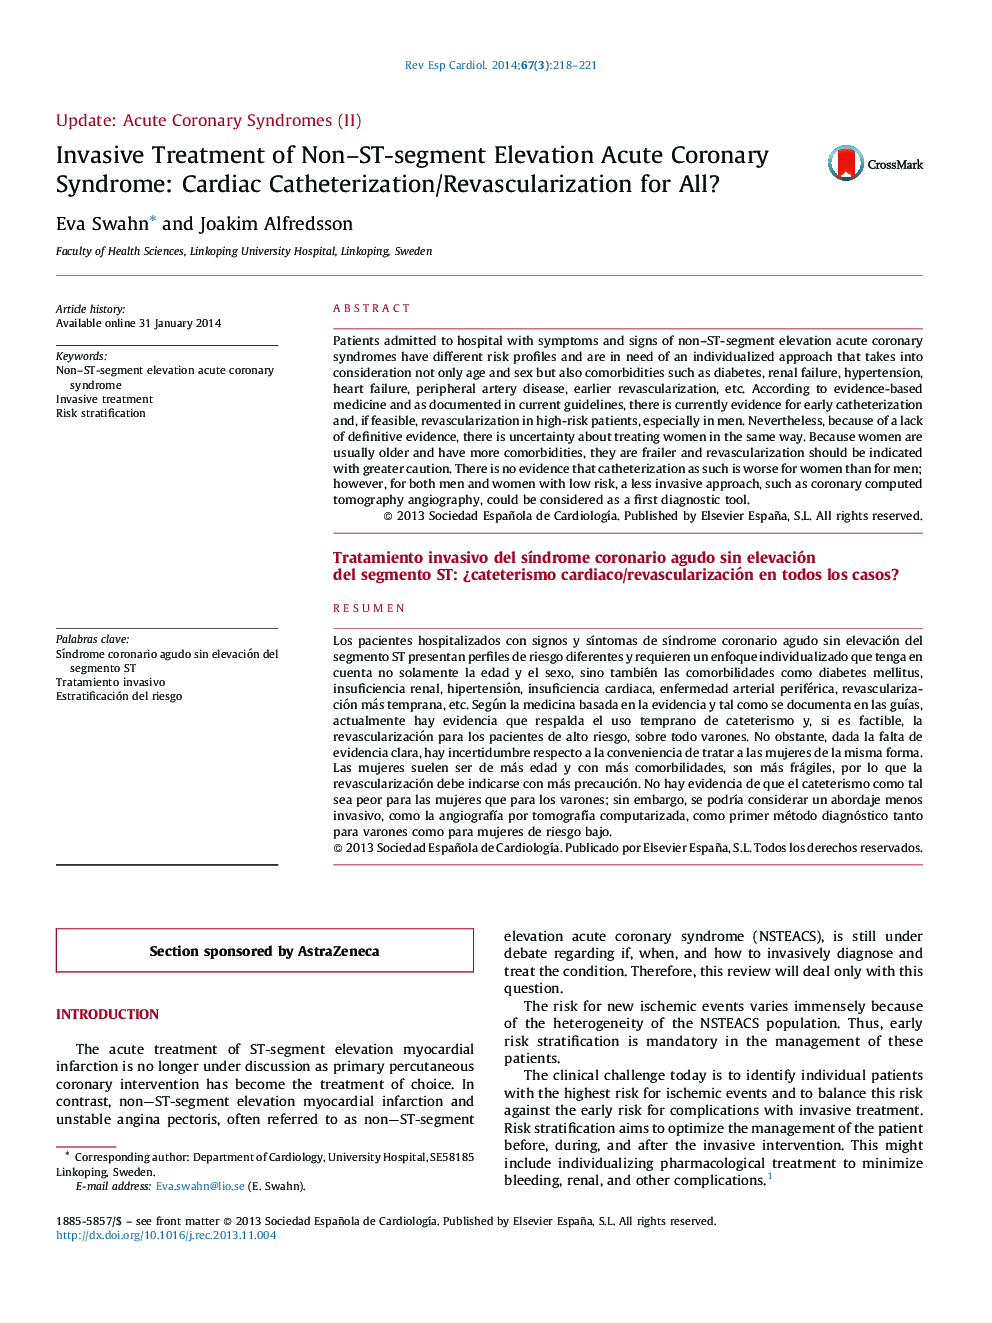 Invasive Treatment of Non–ST-segment Elevation Acute Coronary Syndrome: Cardiac Catheterization/Revascularization for All? 